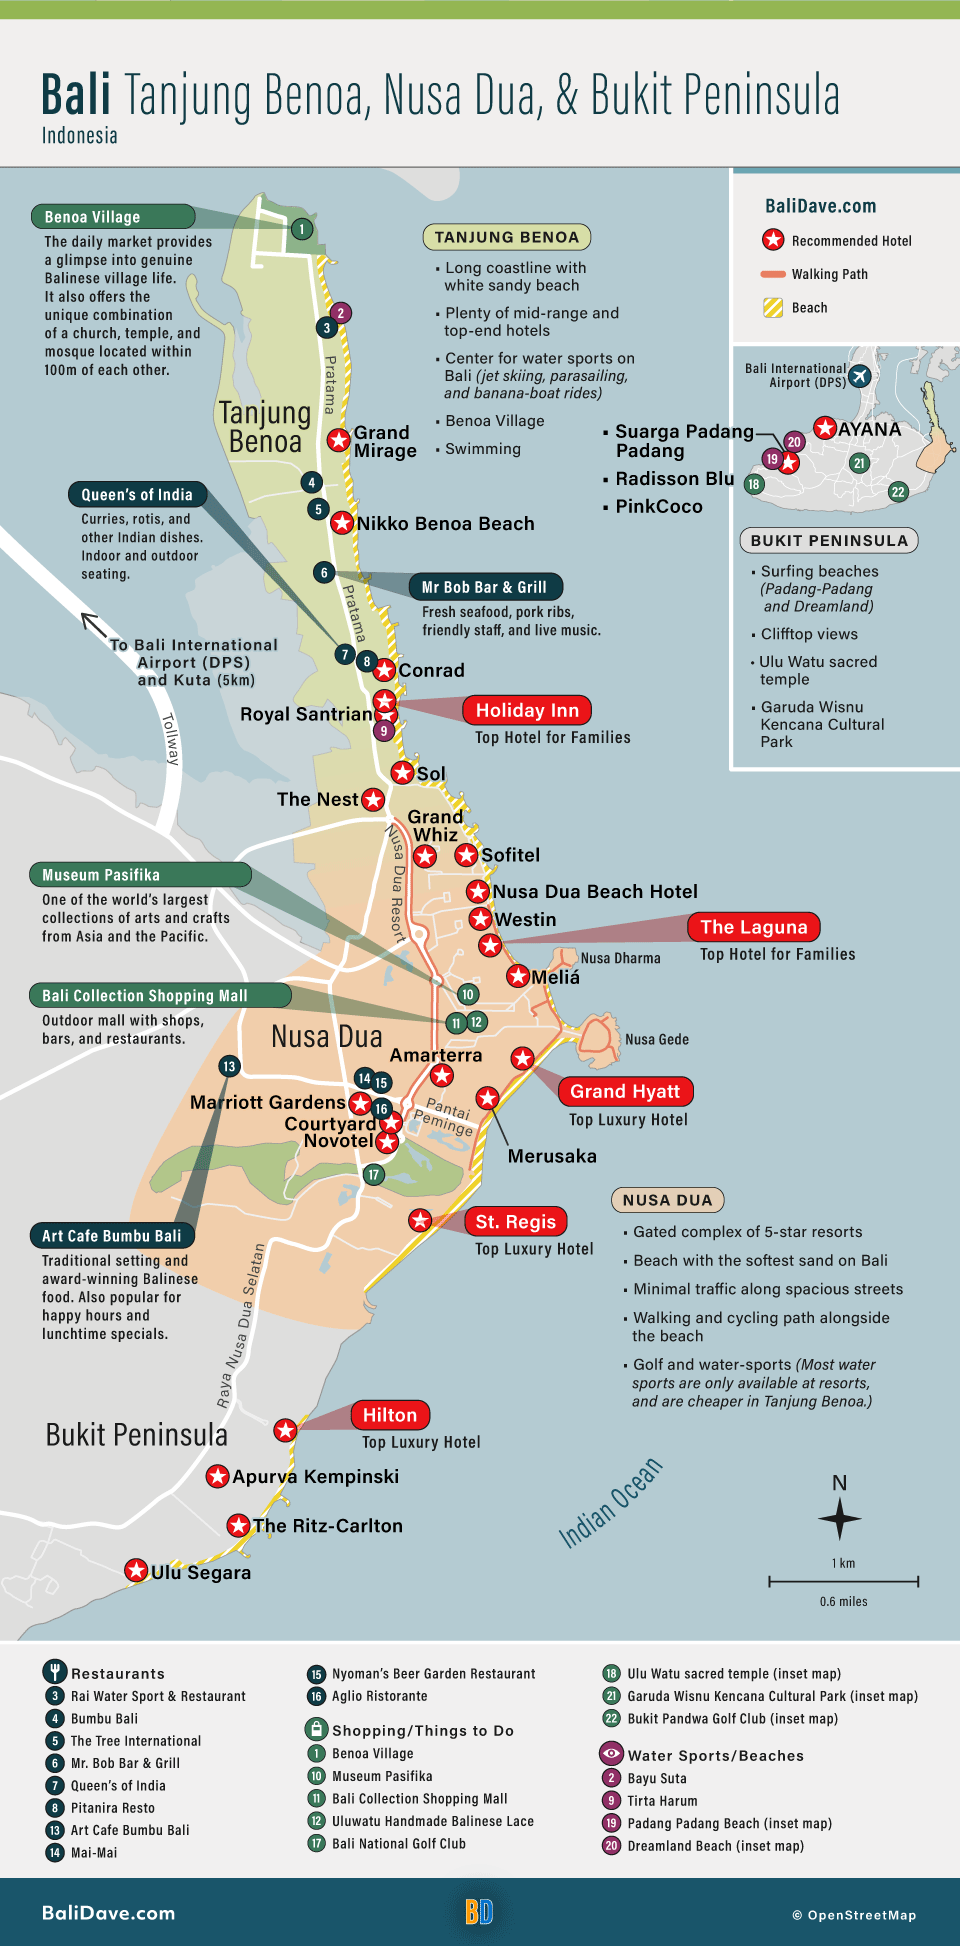 Map of the best hotels in Bali's Bukt peninsula, Nusa Dua, and Tanjung Benoa